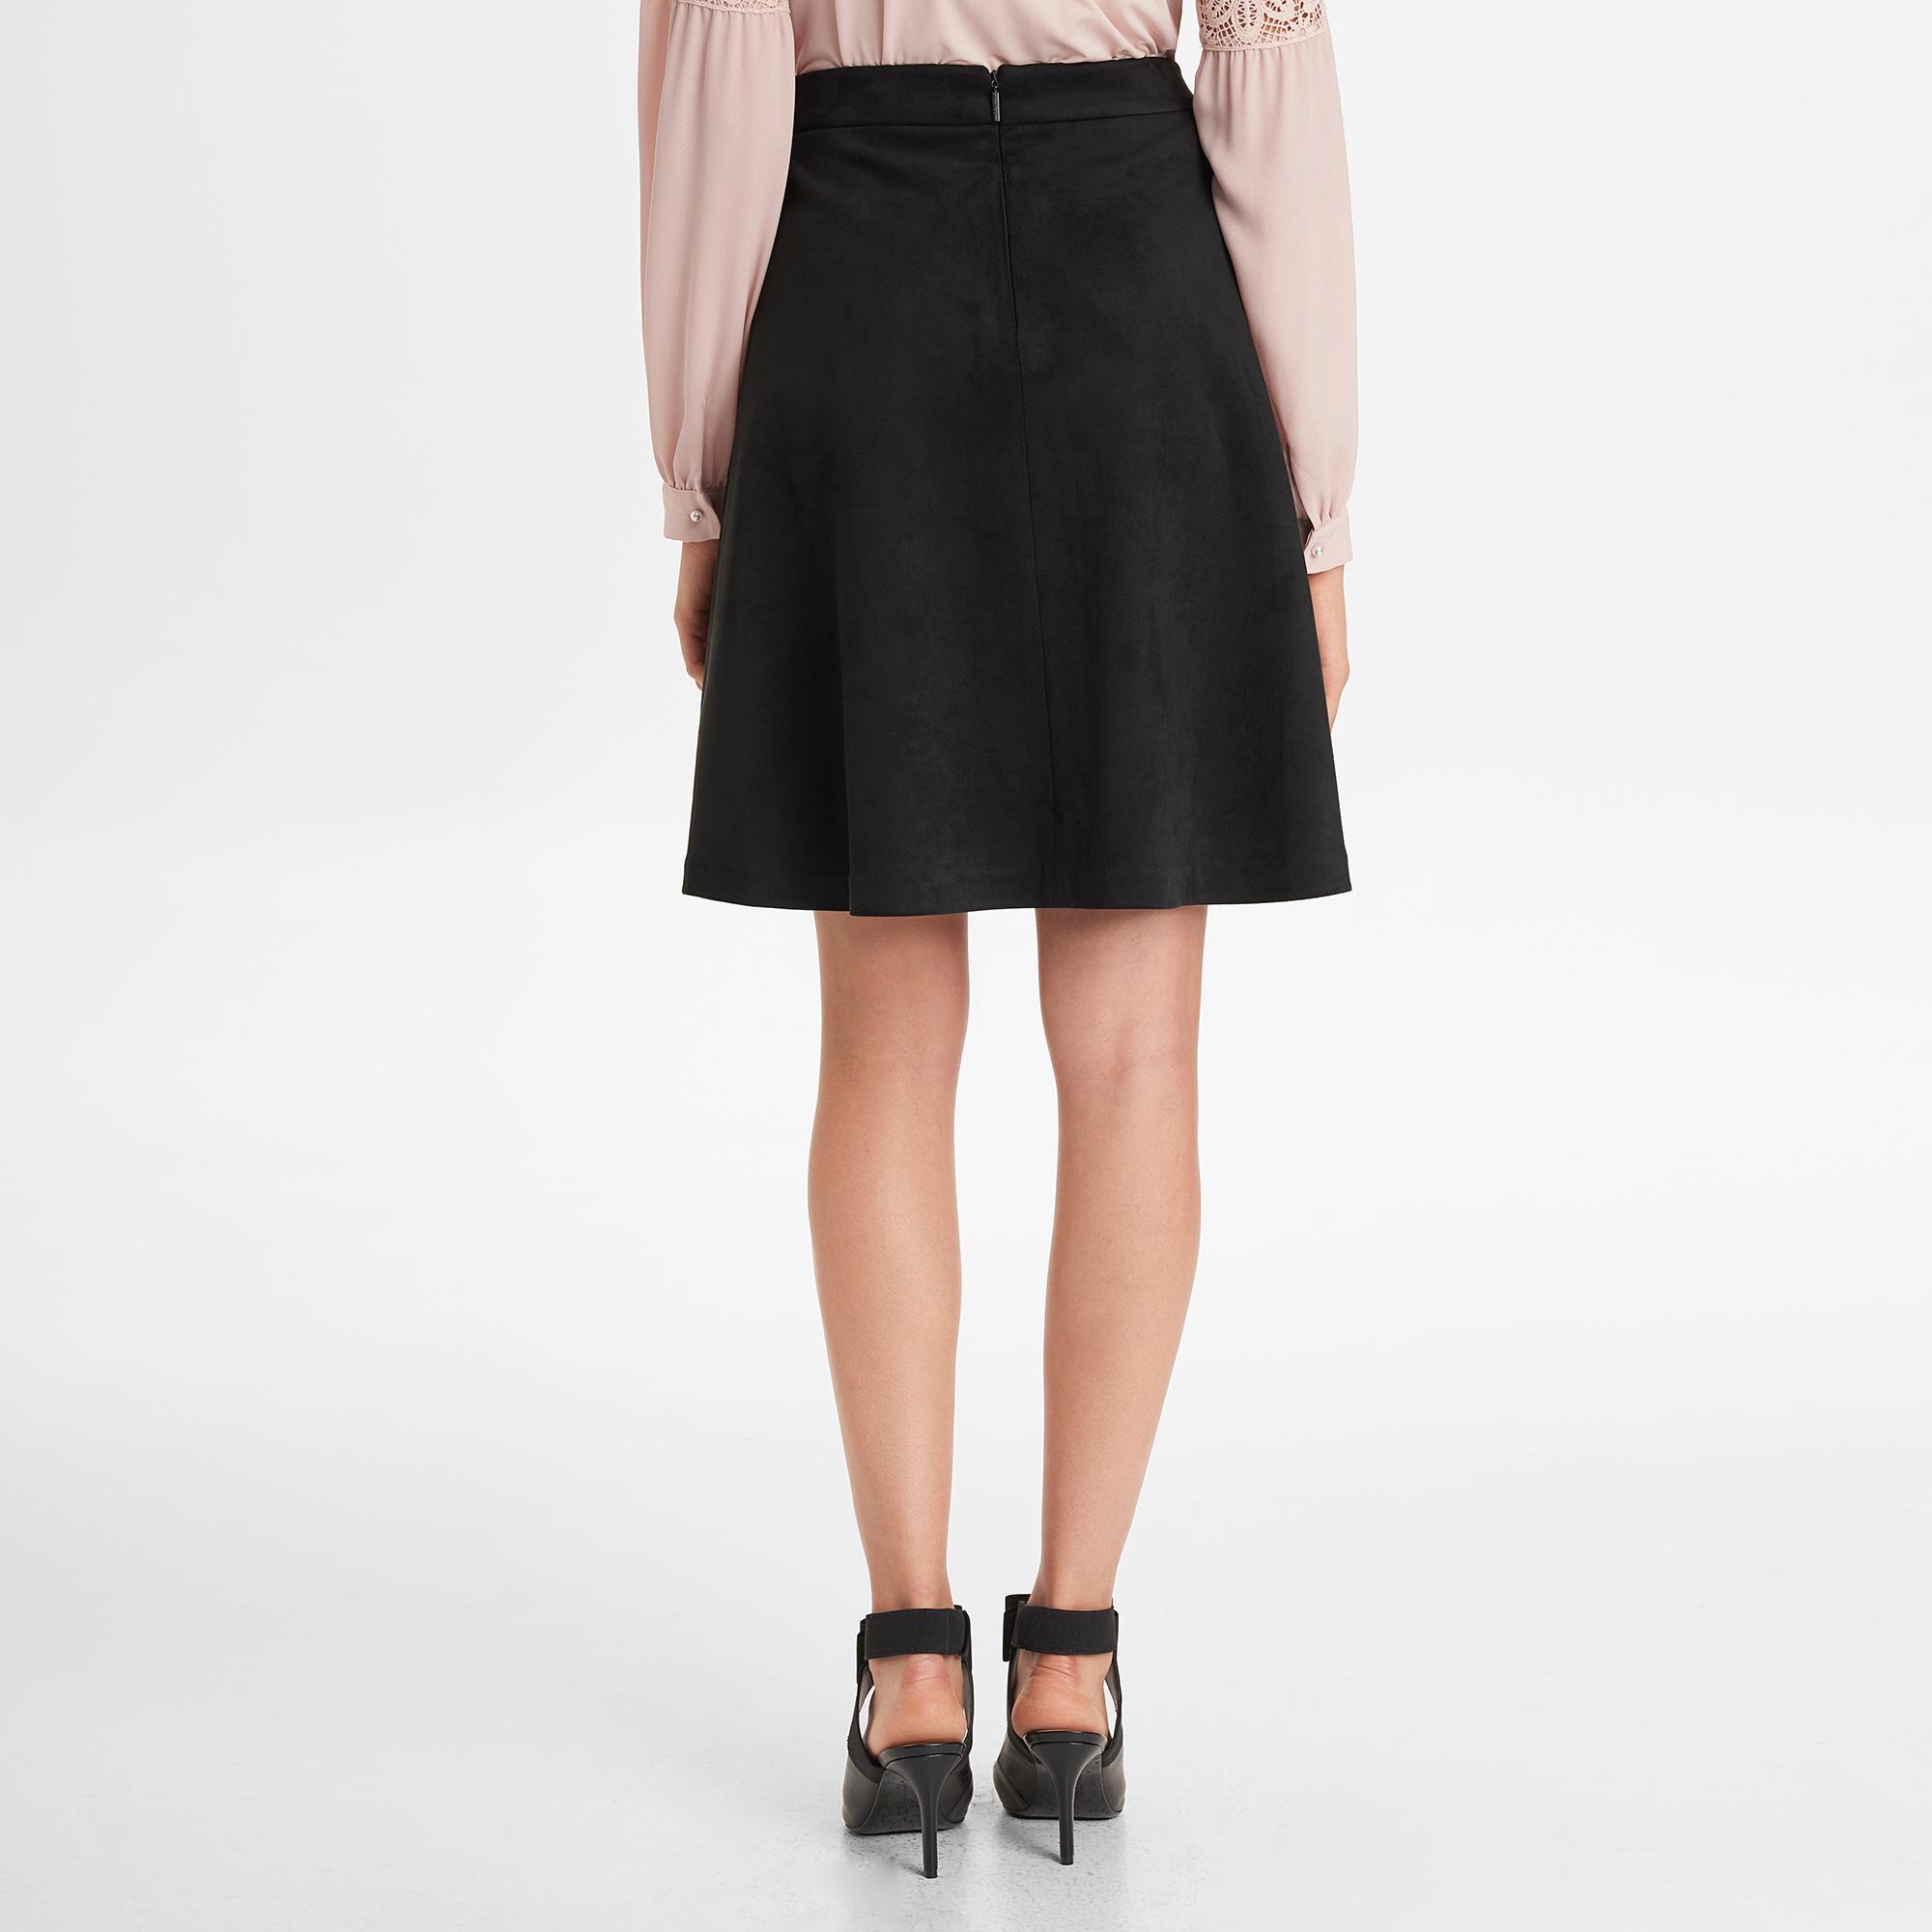 Karl Lagerfeld Suede A Line Skirt in Black - Lyst